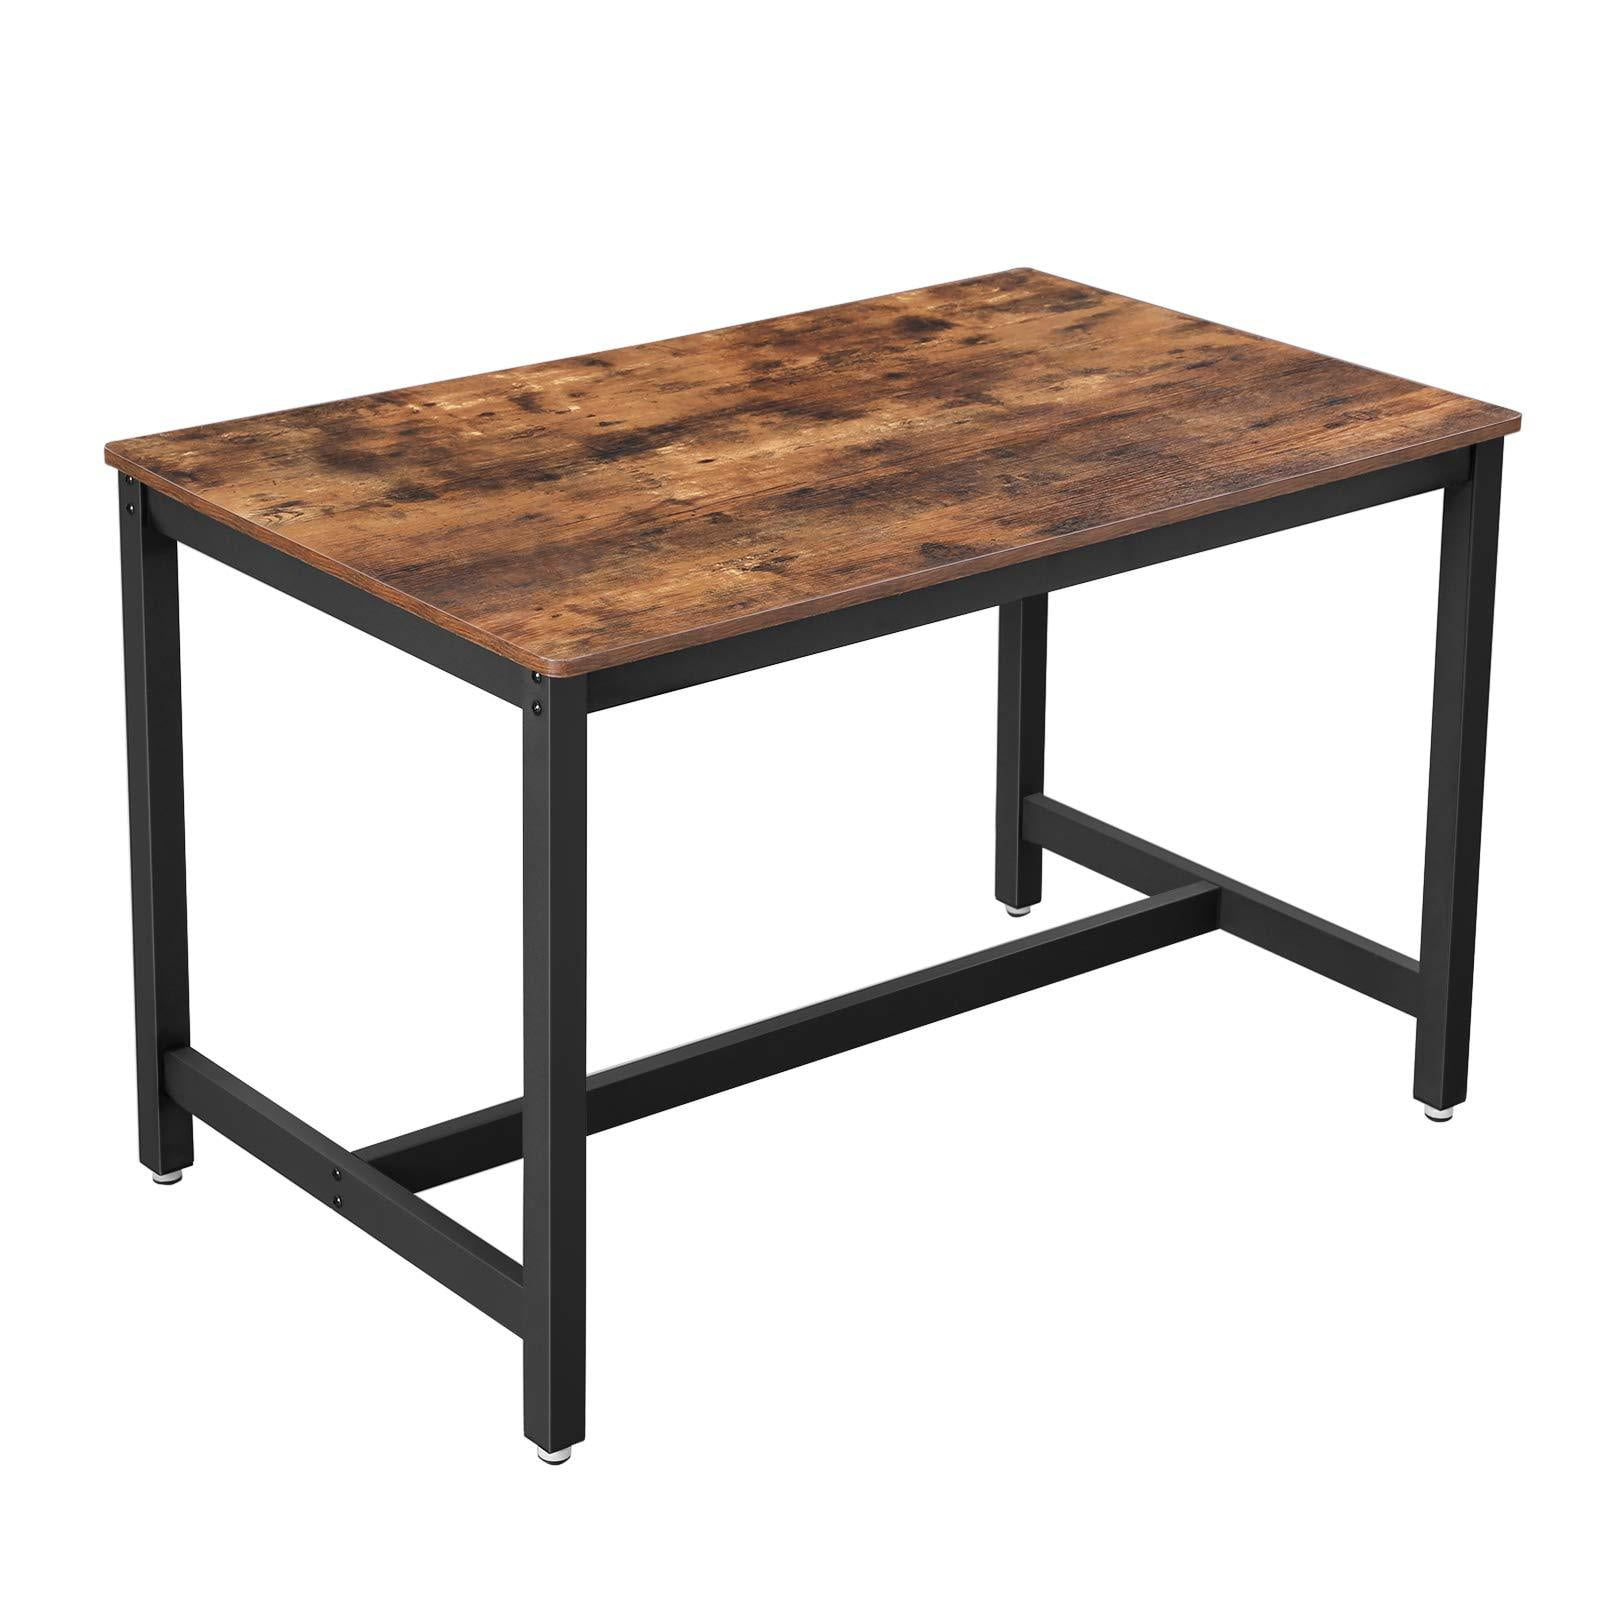 Hairpin metal table Legs,Retro,Bench,desk,size 8''-28''; Industrial,steel Set 4 